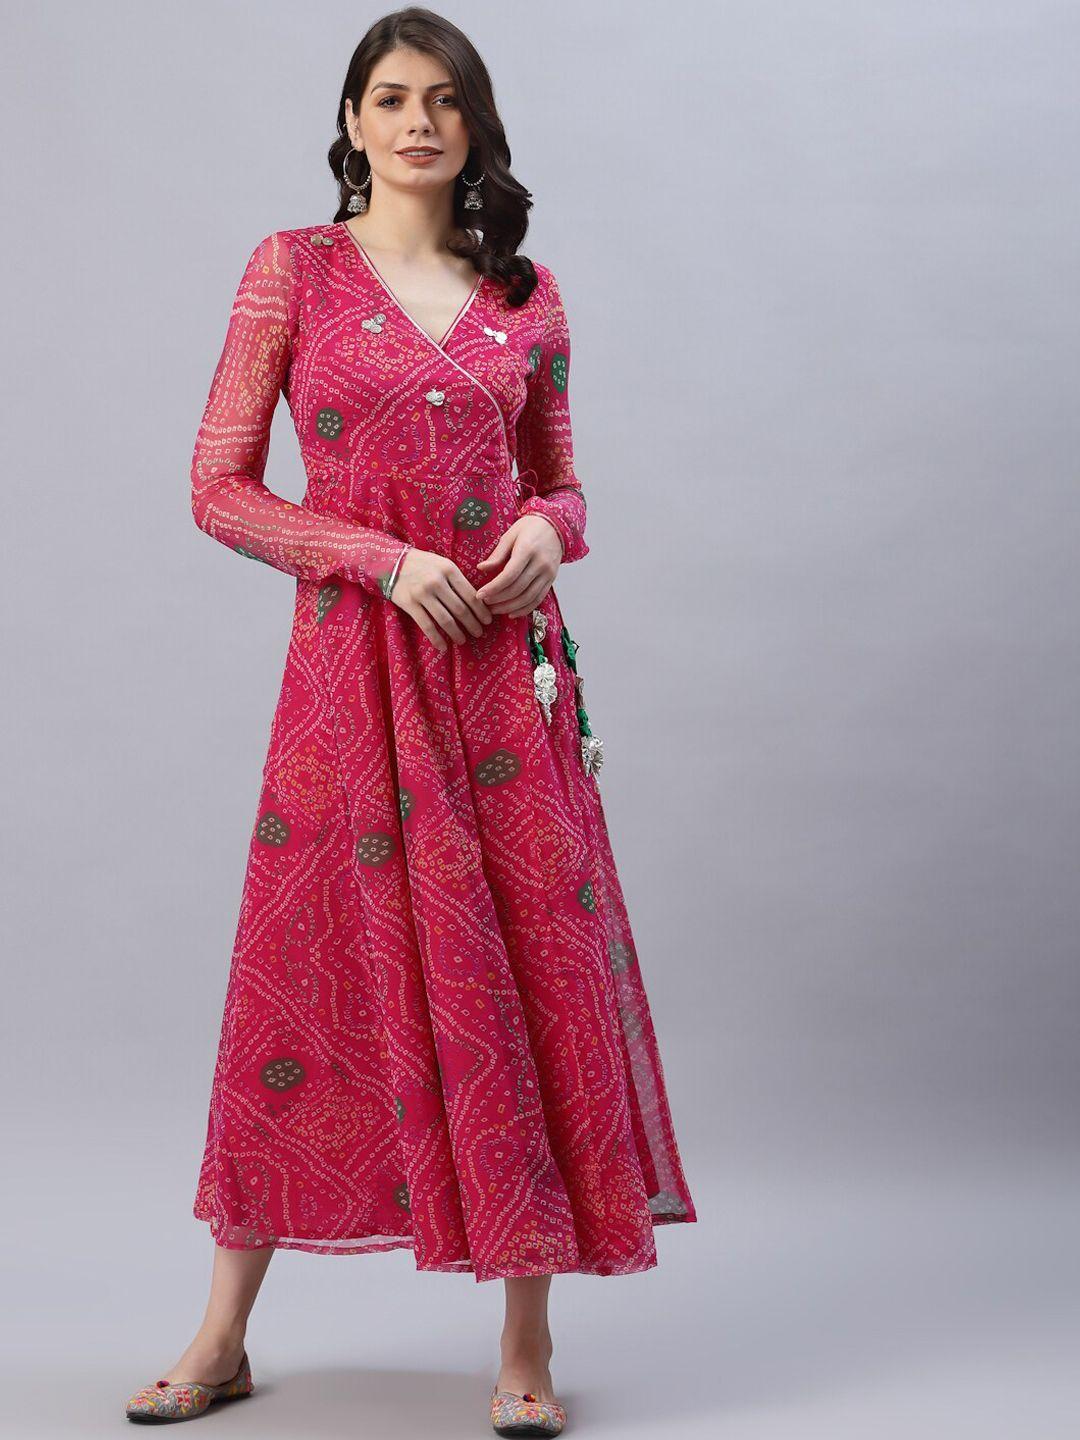 ragavi women pink ethnic motifs printed long sleeve georgette anarkali kurta